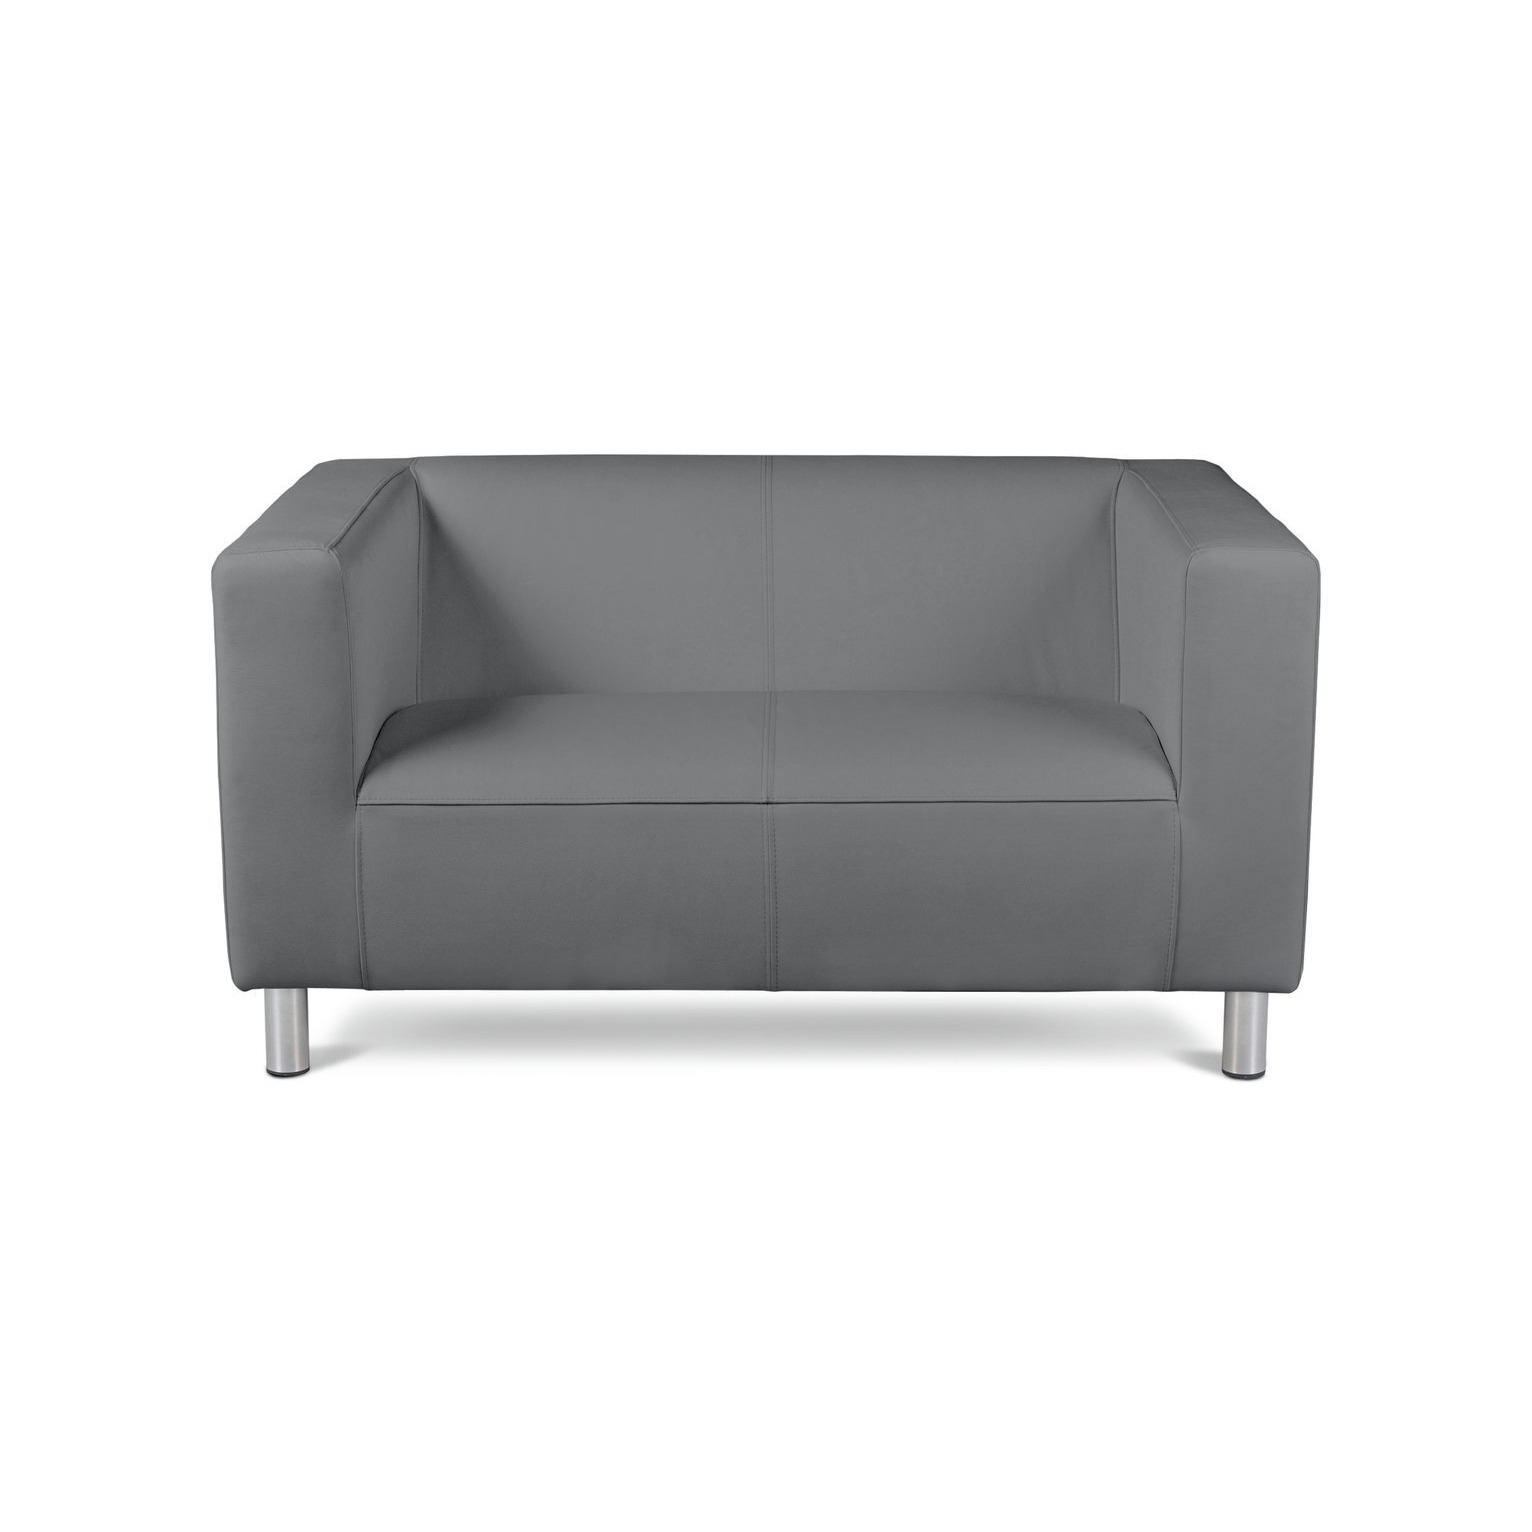 Argos Home Moda Small Faux Leather 2 Seater Sofa - Grey - image 1